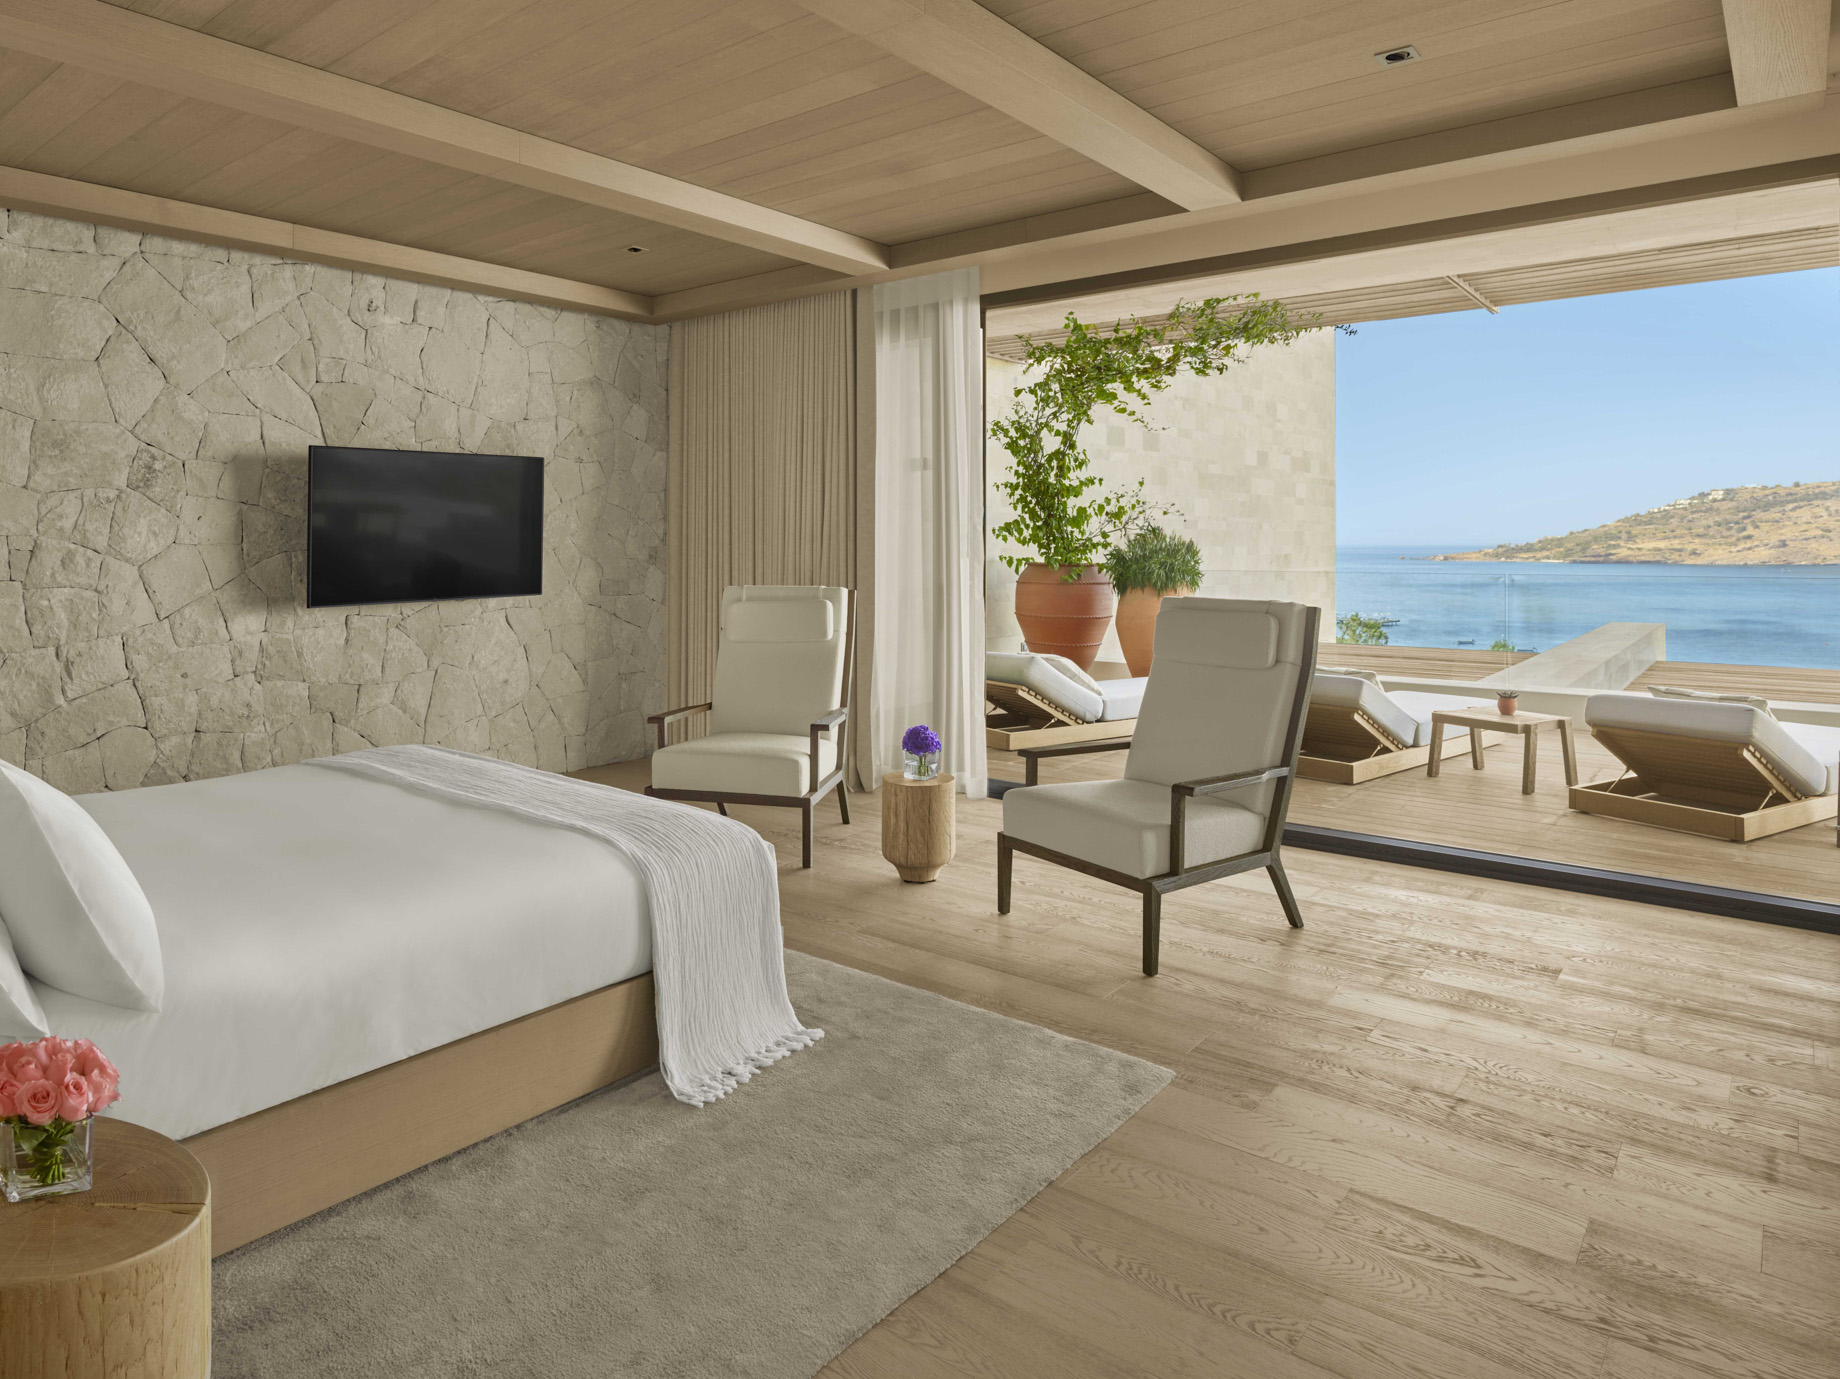 The Bodrum EDITION Hotel – Bodrum Mugla, Turkey – Yalikavak Suite Bedroom